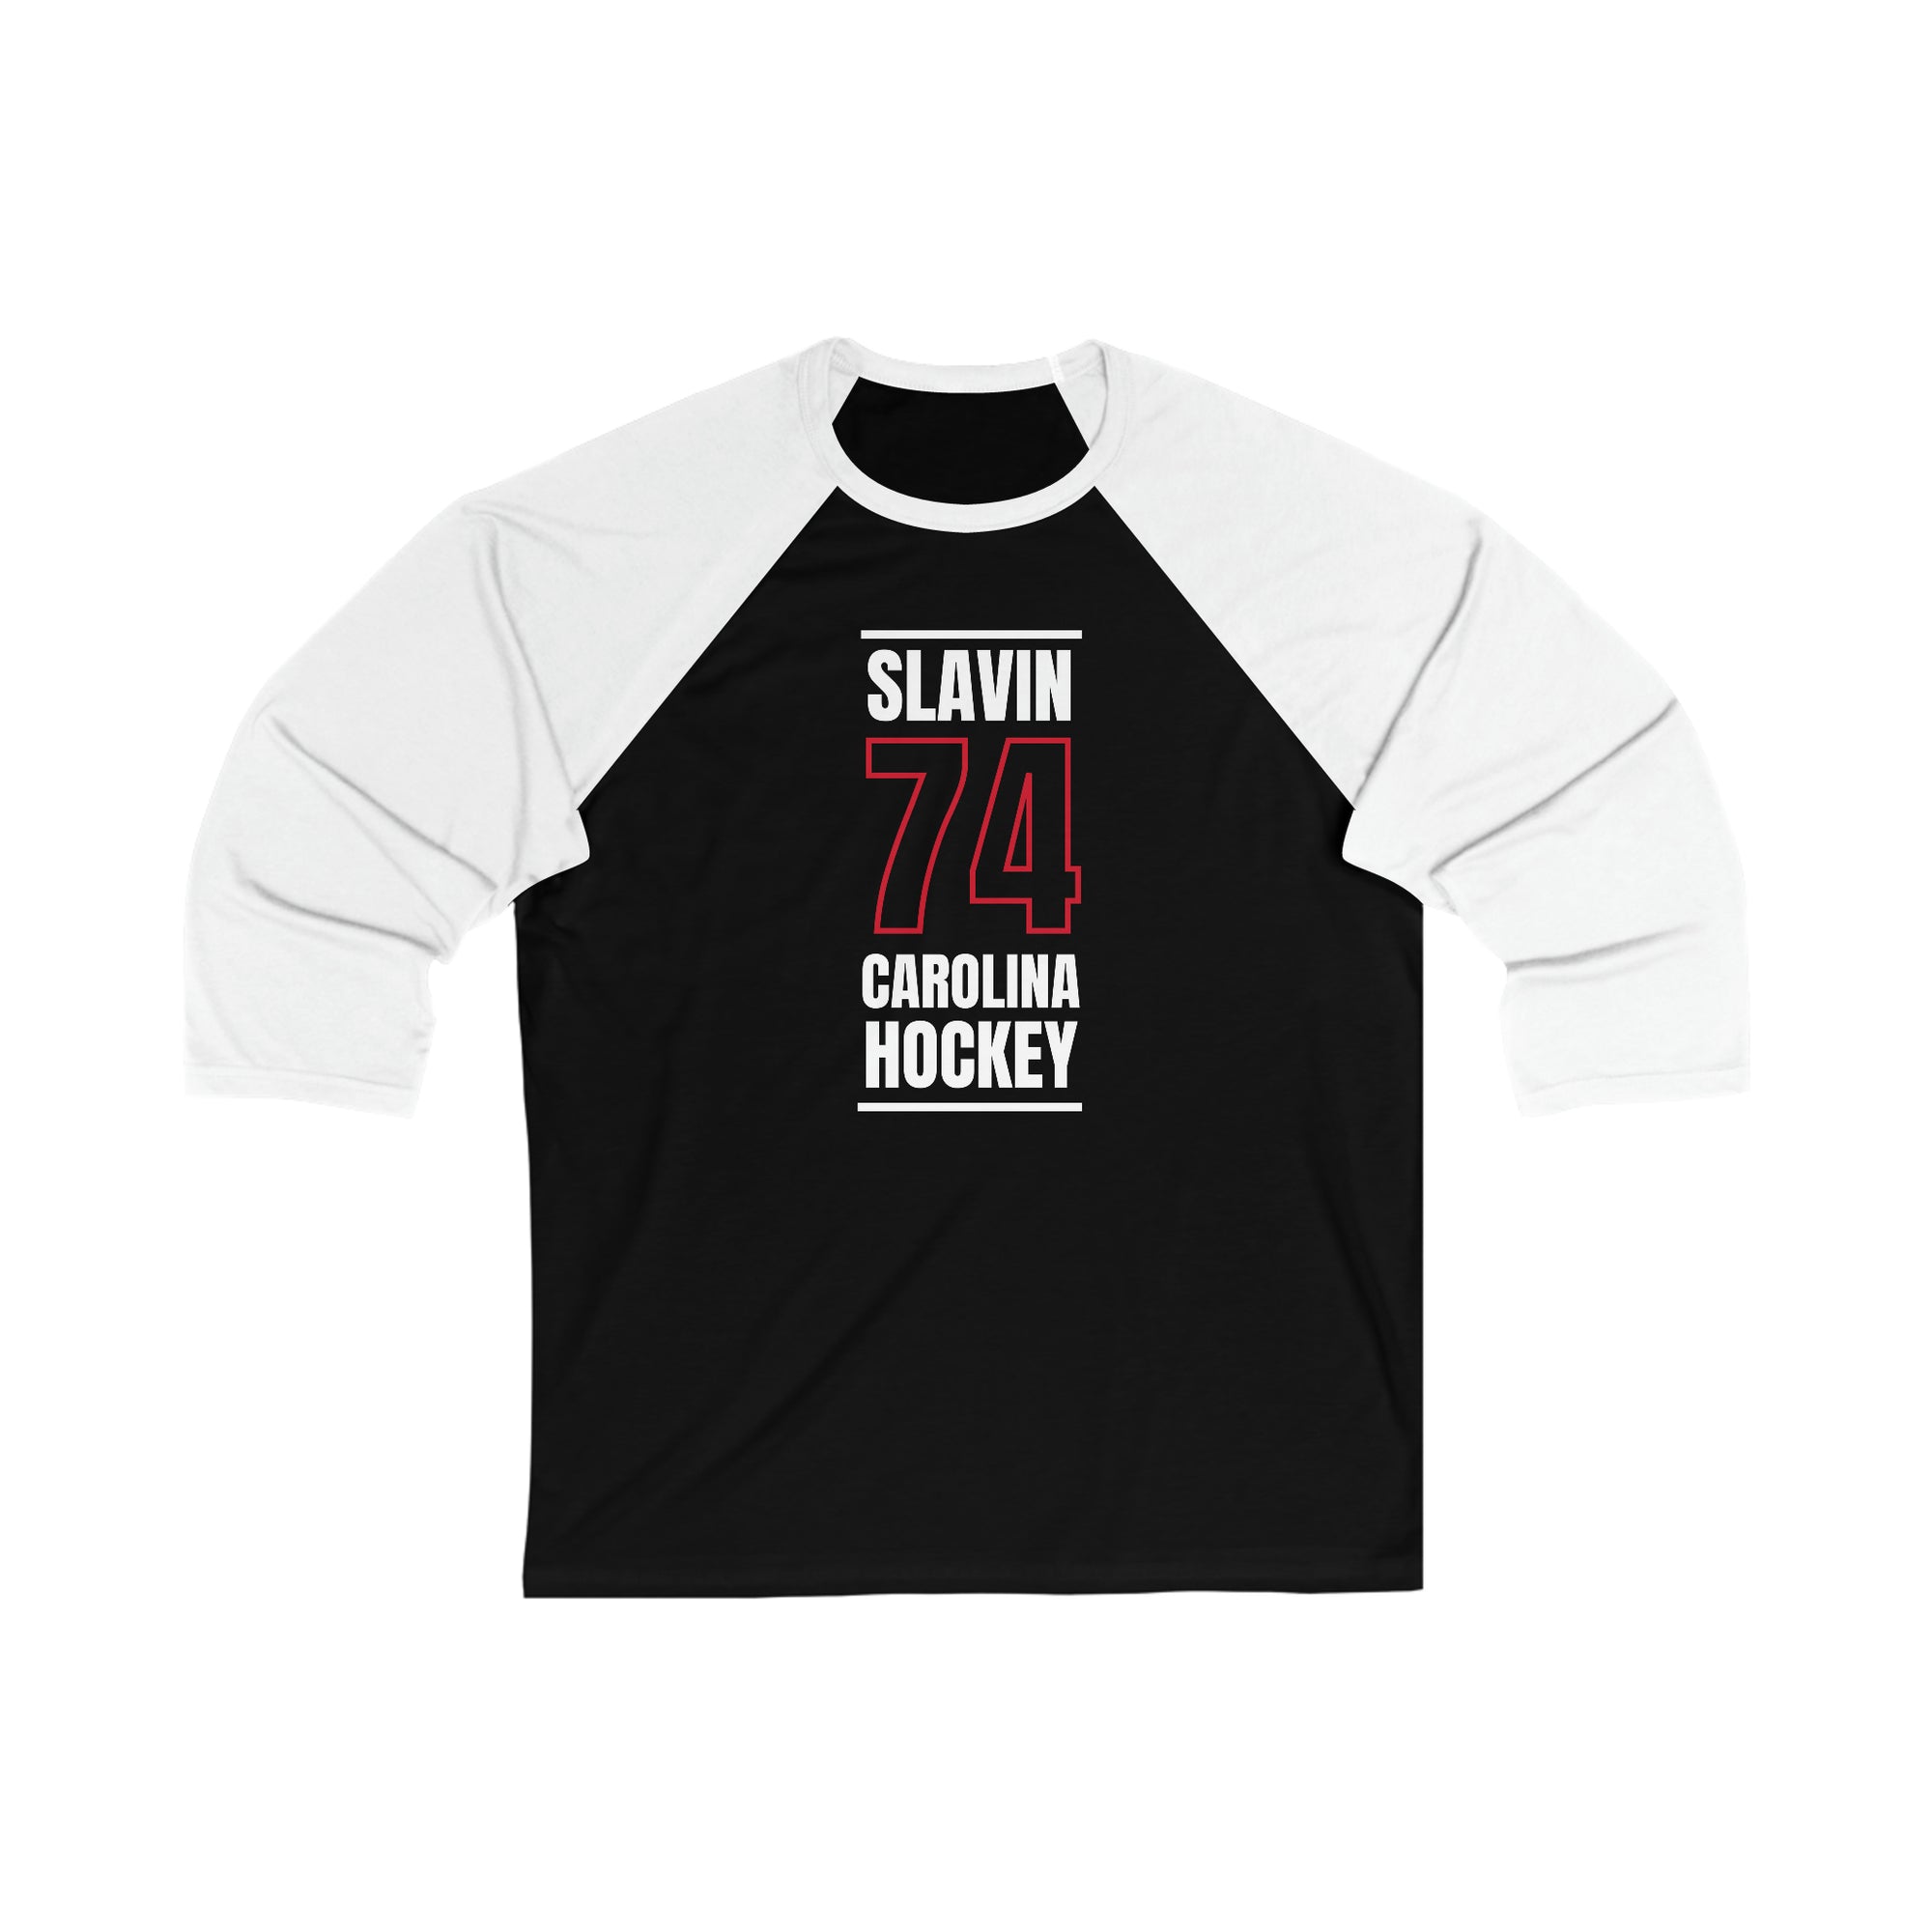 Slavin 74 Carolina Hockey Black Vertical Design Unisex Tri-Blend 3/4 Sleeve Raglan Baseball Shirt